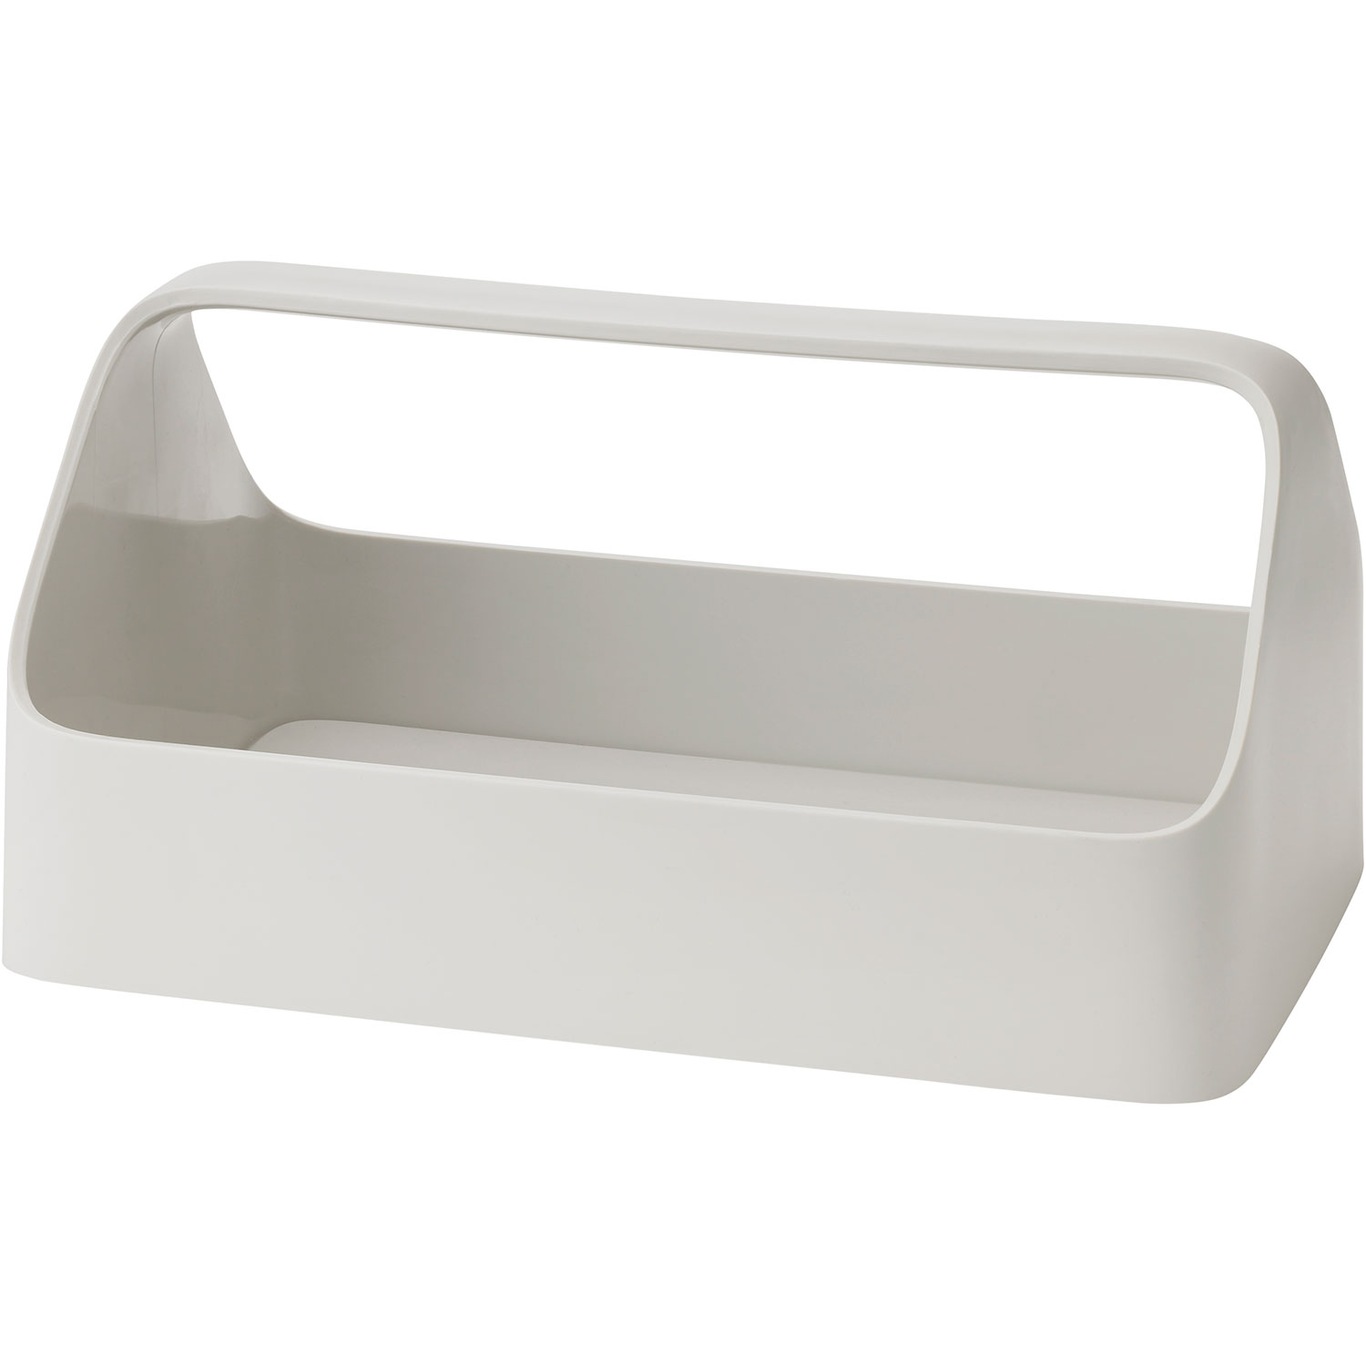 Handy-Box Storage Box, Light Grey